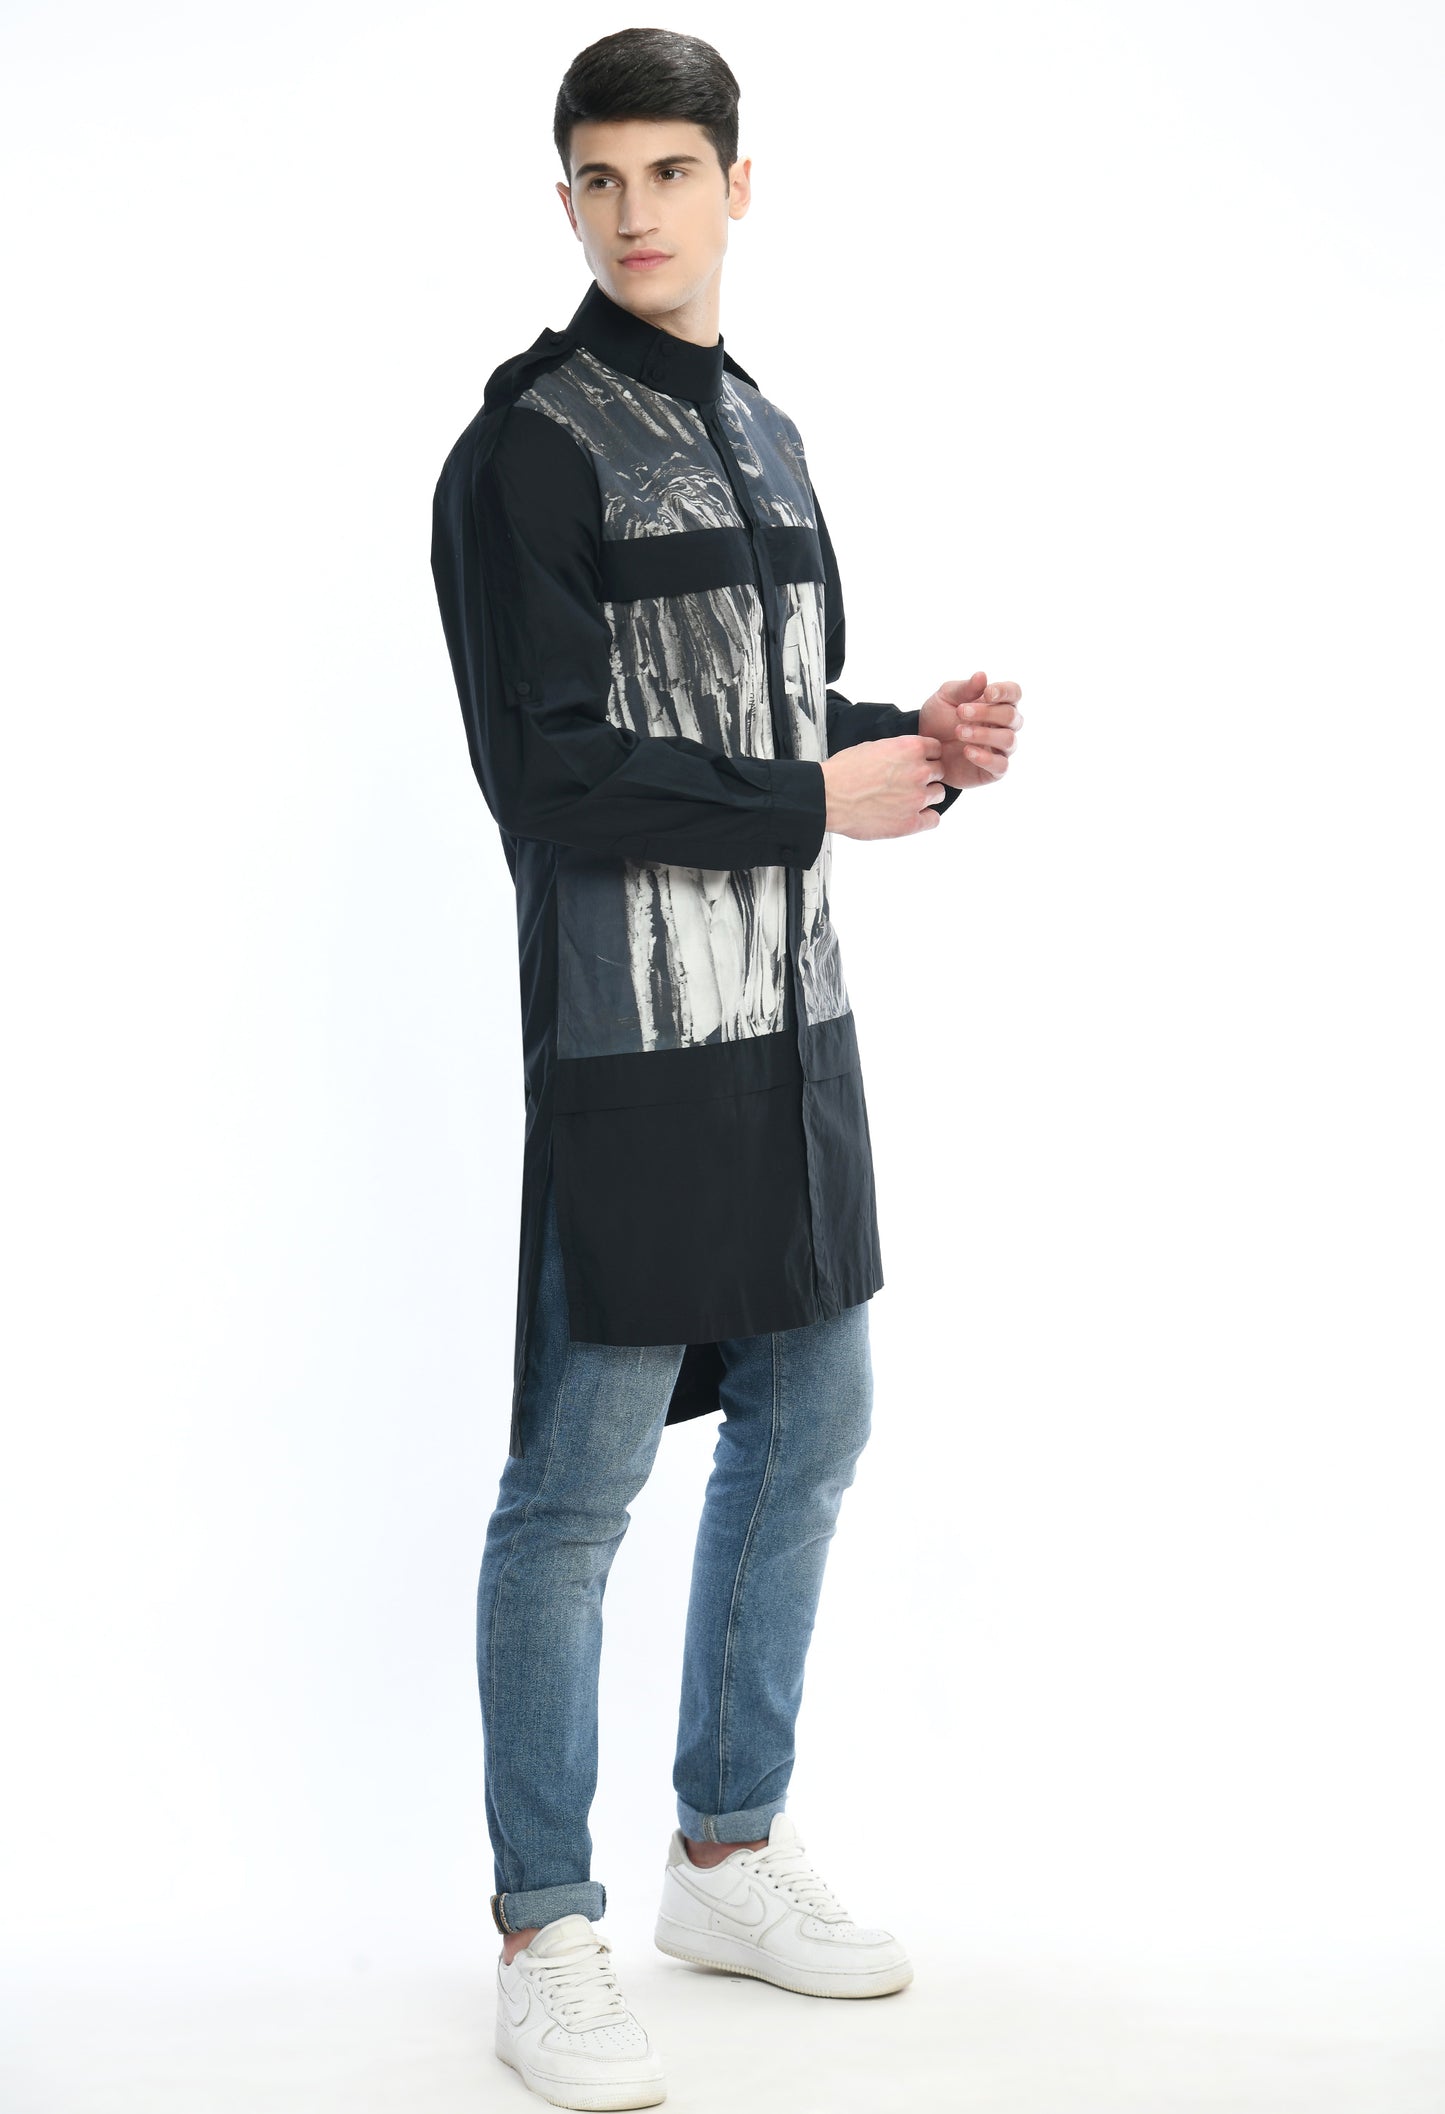 Black high low, stylish cotton shirt with digital print on it